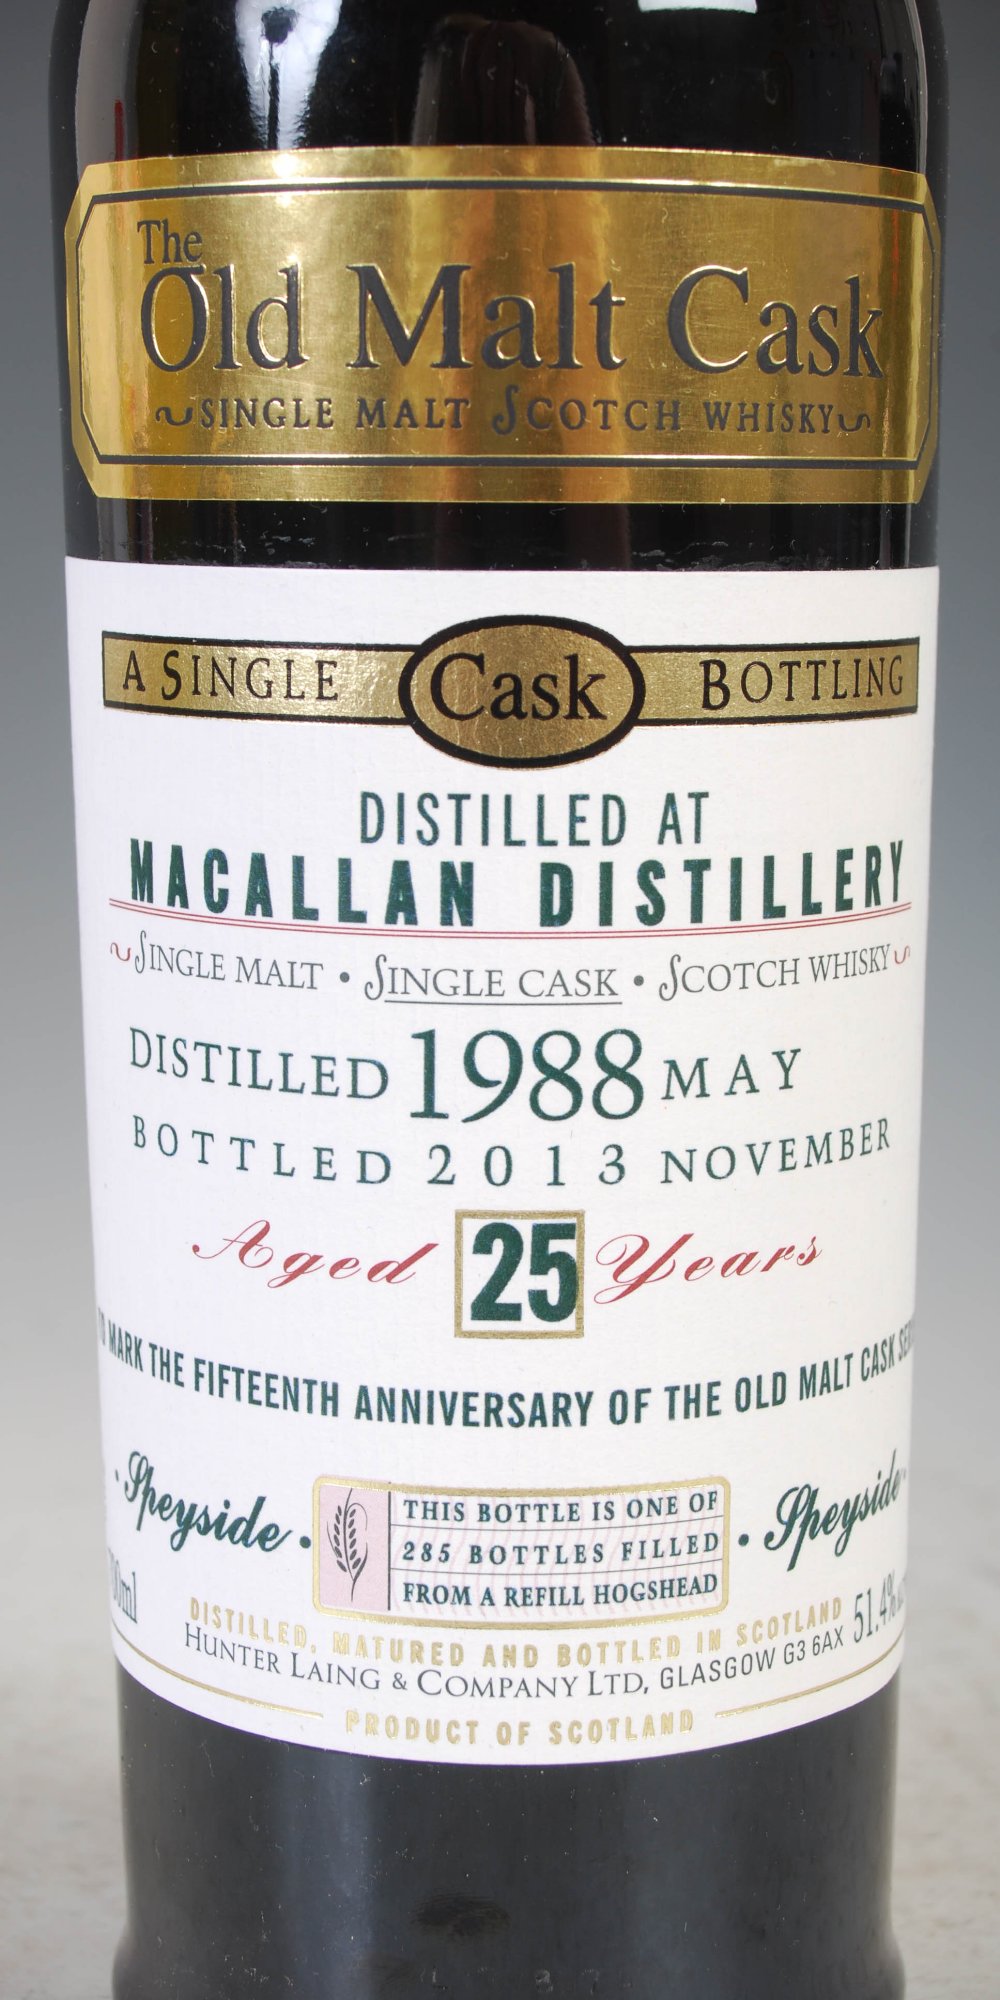 A boxed bottle of The Old Malt Cask, Single Malt Scotch Whisky, A Single Cask Bottling Distilled - Image 3 of 6